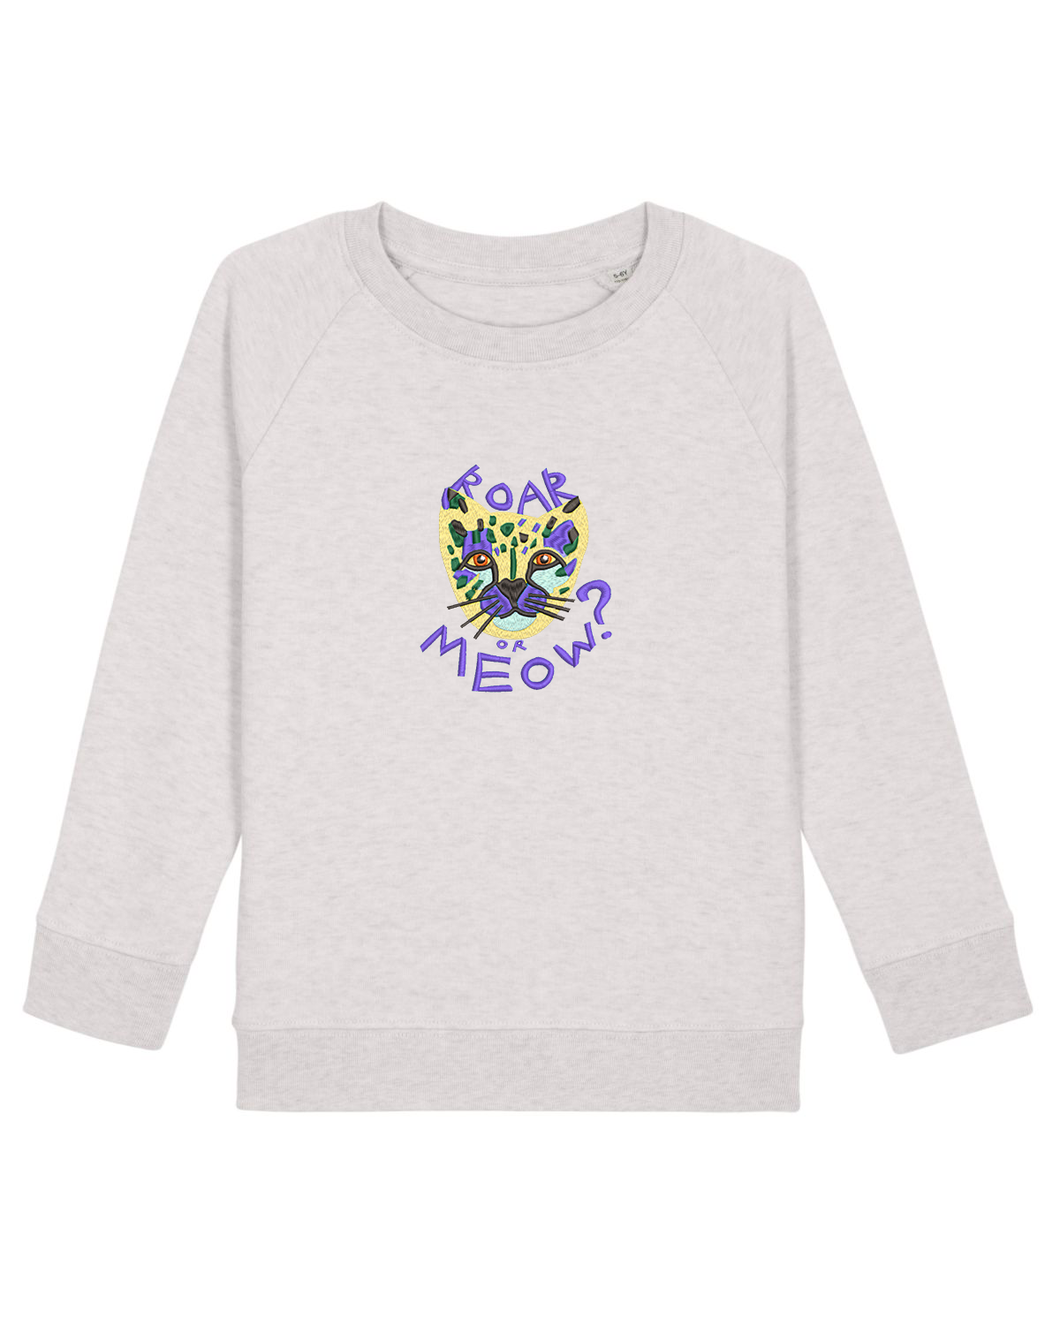 ROAR or MEOW? 🐯- Embroidered UNISEX KIDS crew neck sweatshirt